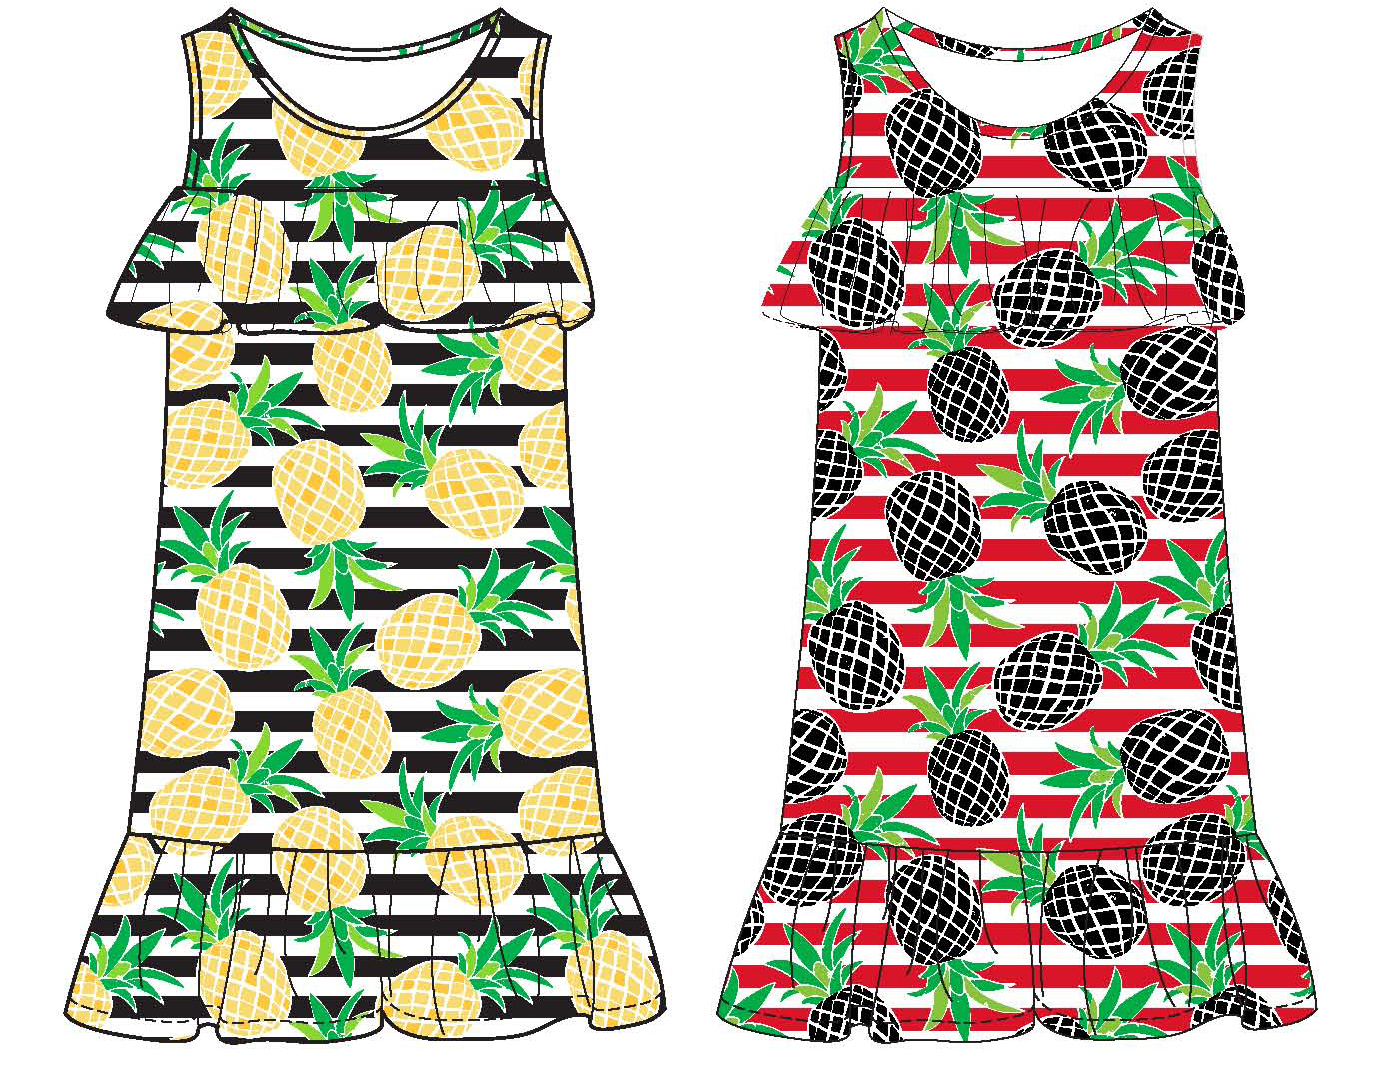 Girl's Sleeveless DRESS w/ Ruffle Front Yoke & Pineapples Pint - Sizes 4-6X